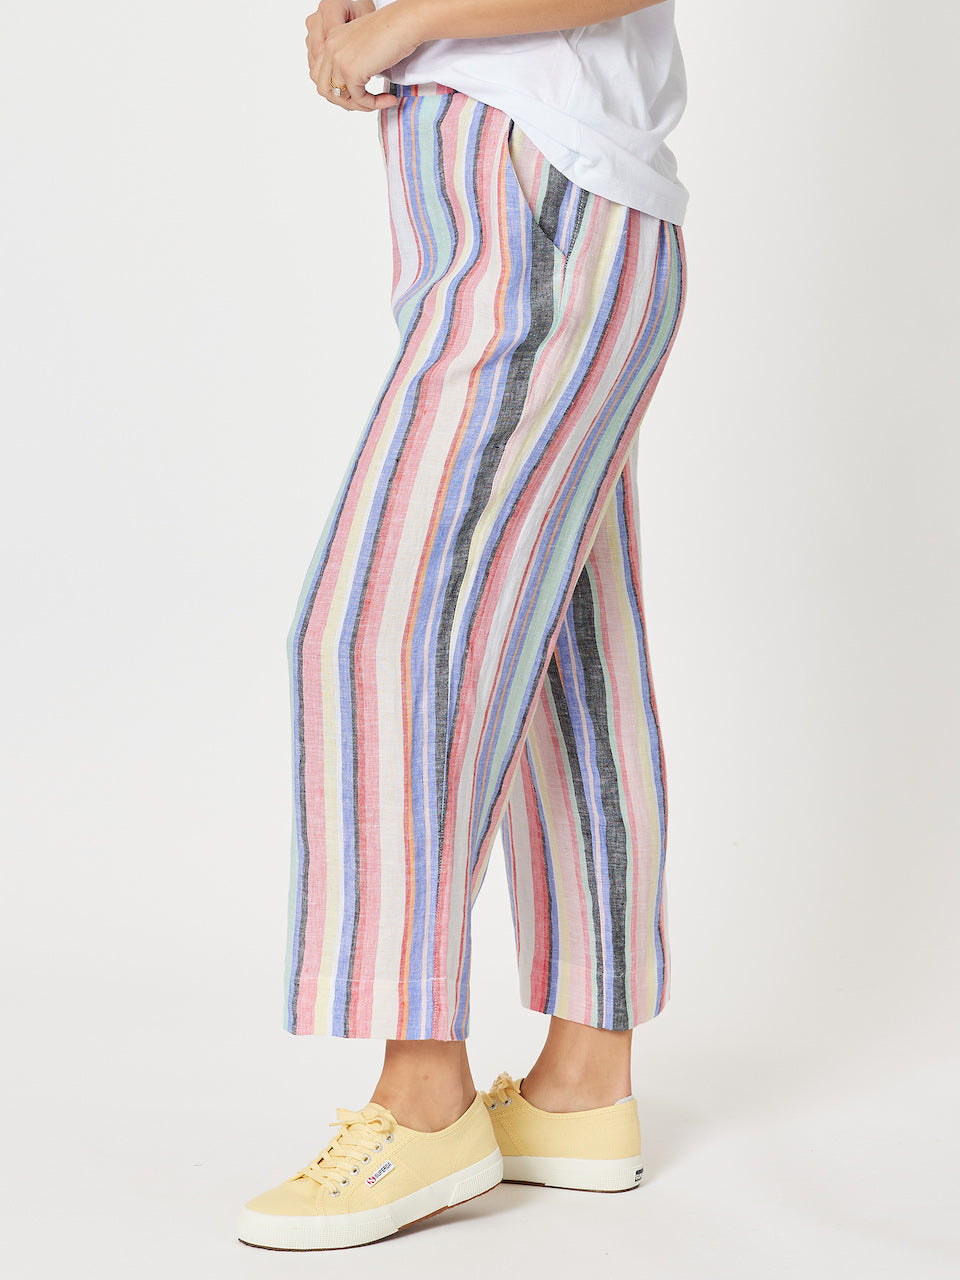 Stripe Linen Pant - Multi Pastel